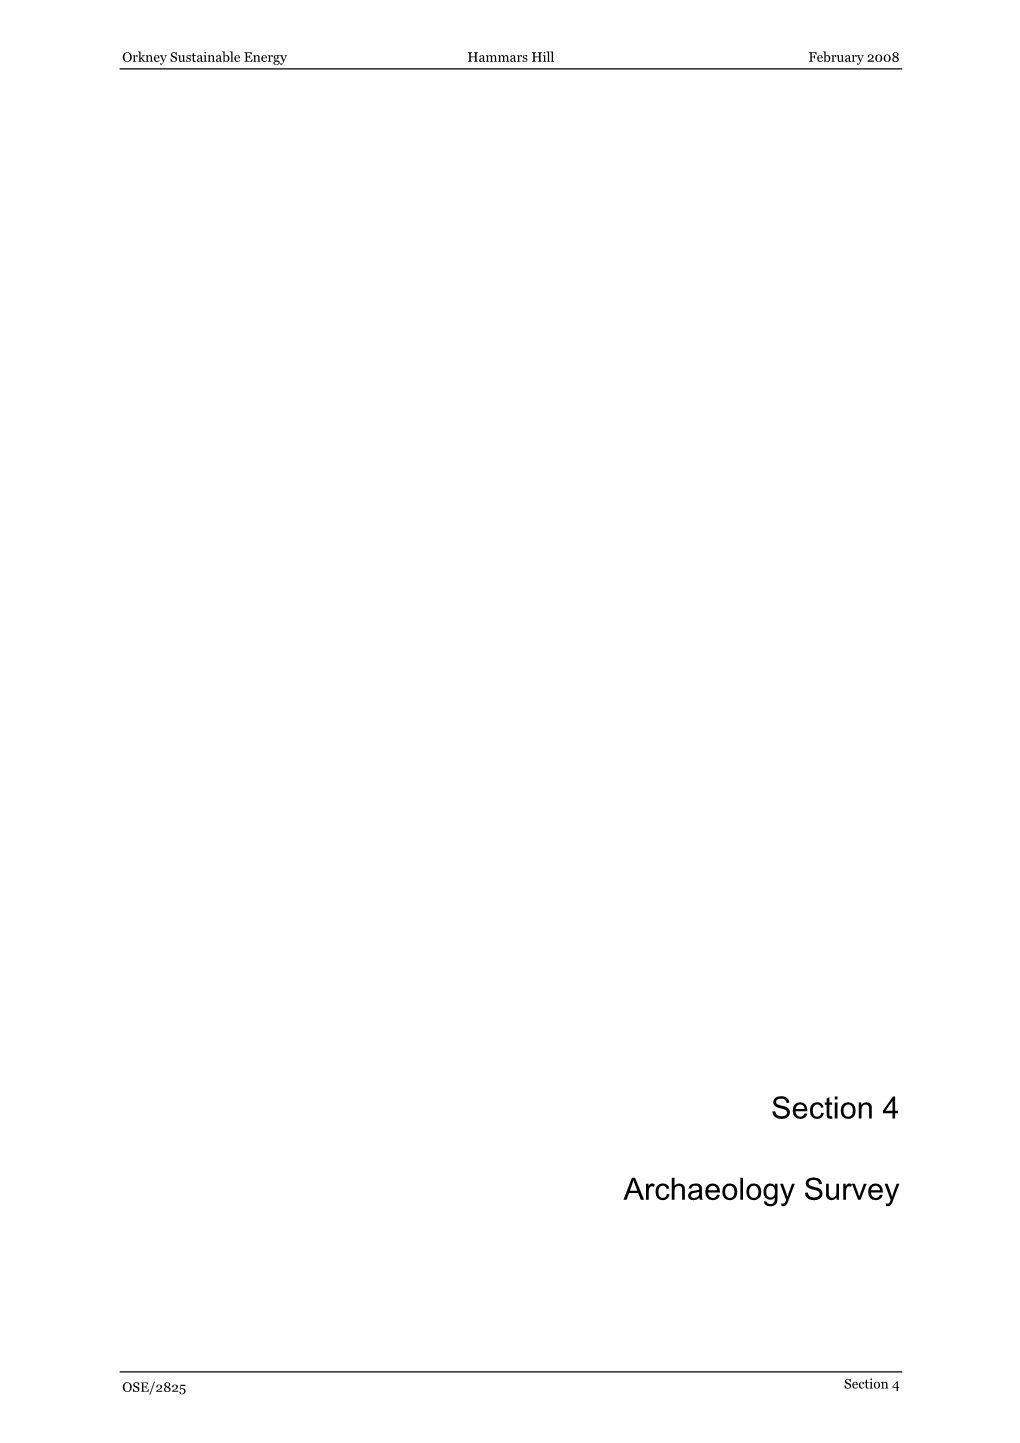 Hammars Hill Archaeology Report